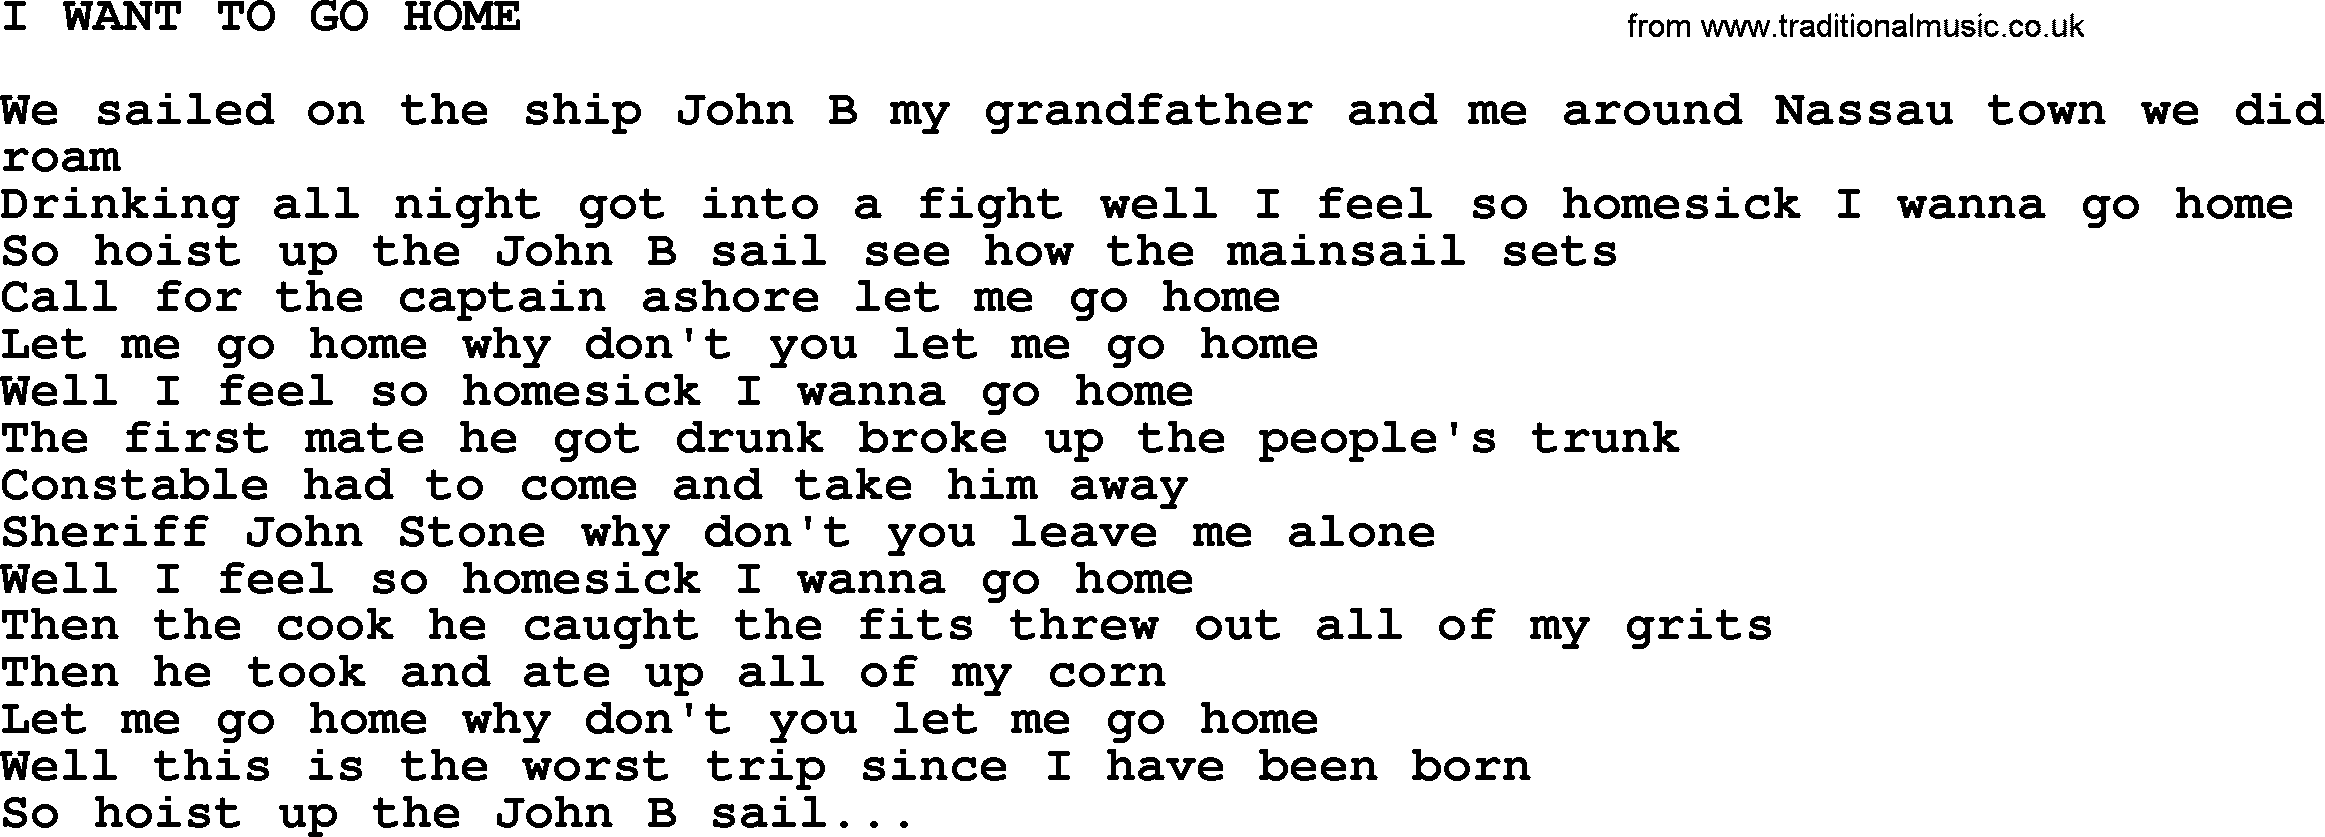 Johnny Cash song I Want To Go Home.txt lyrics